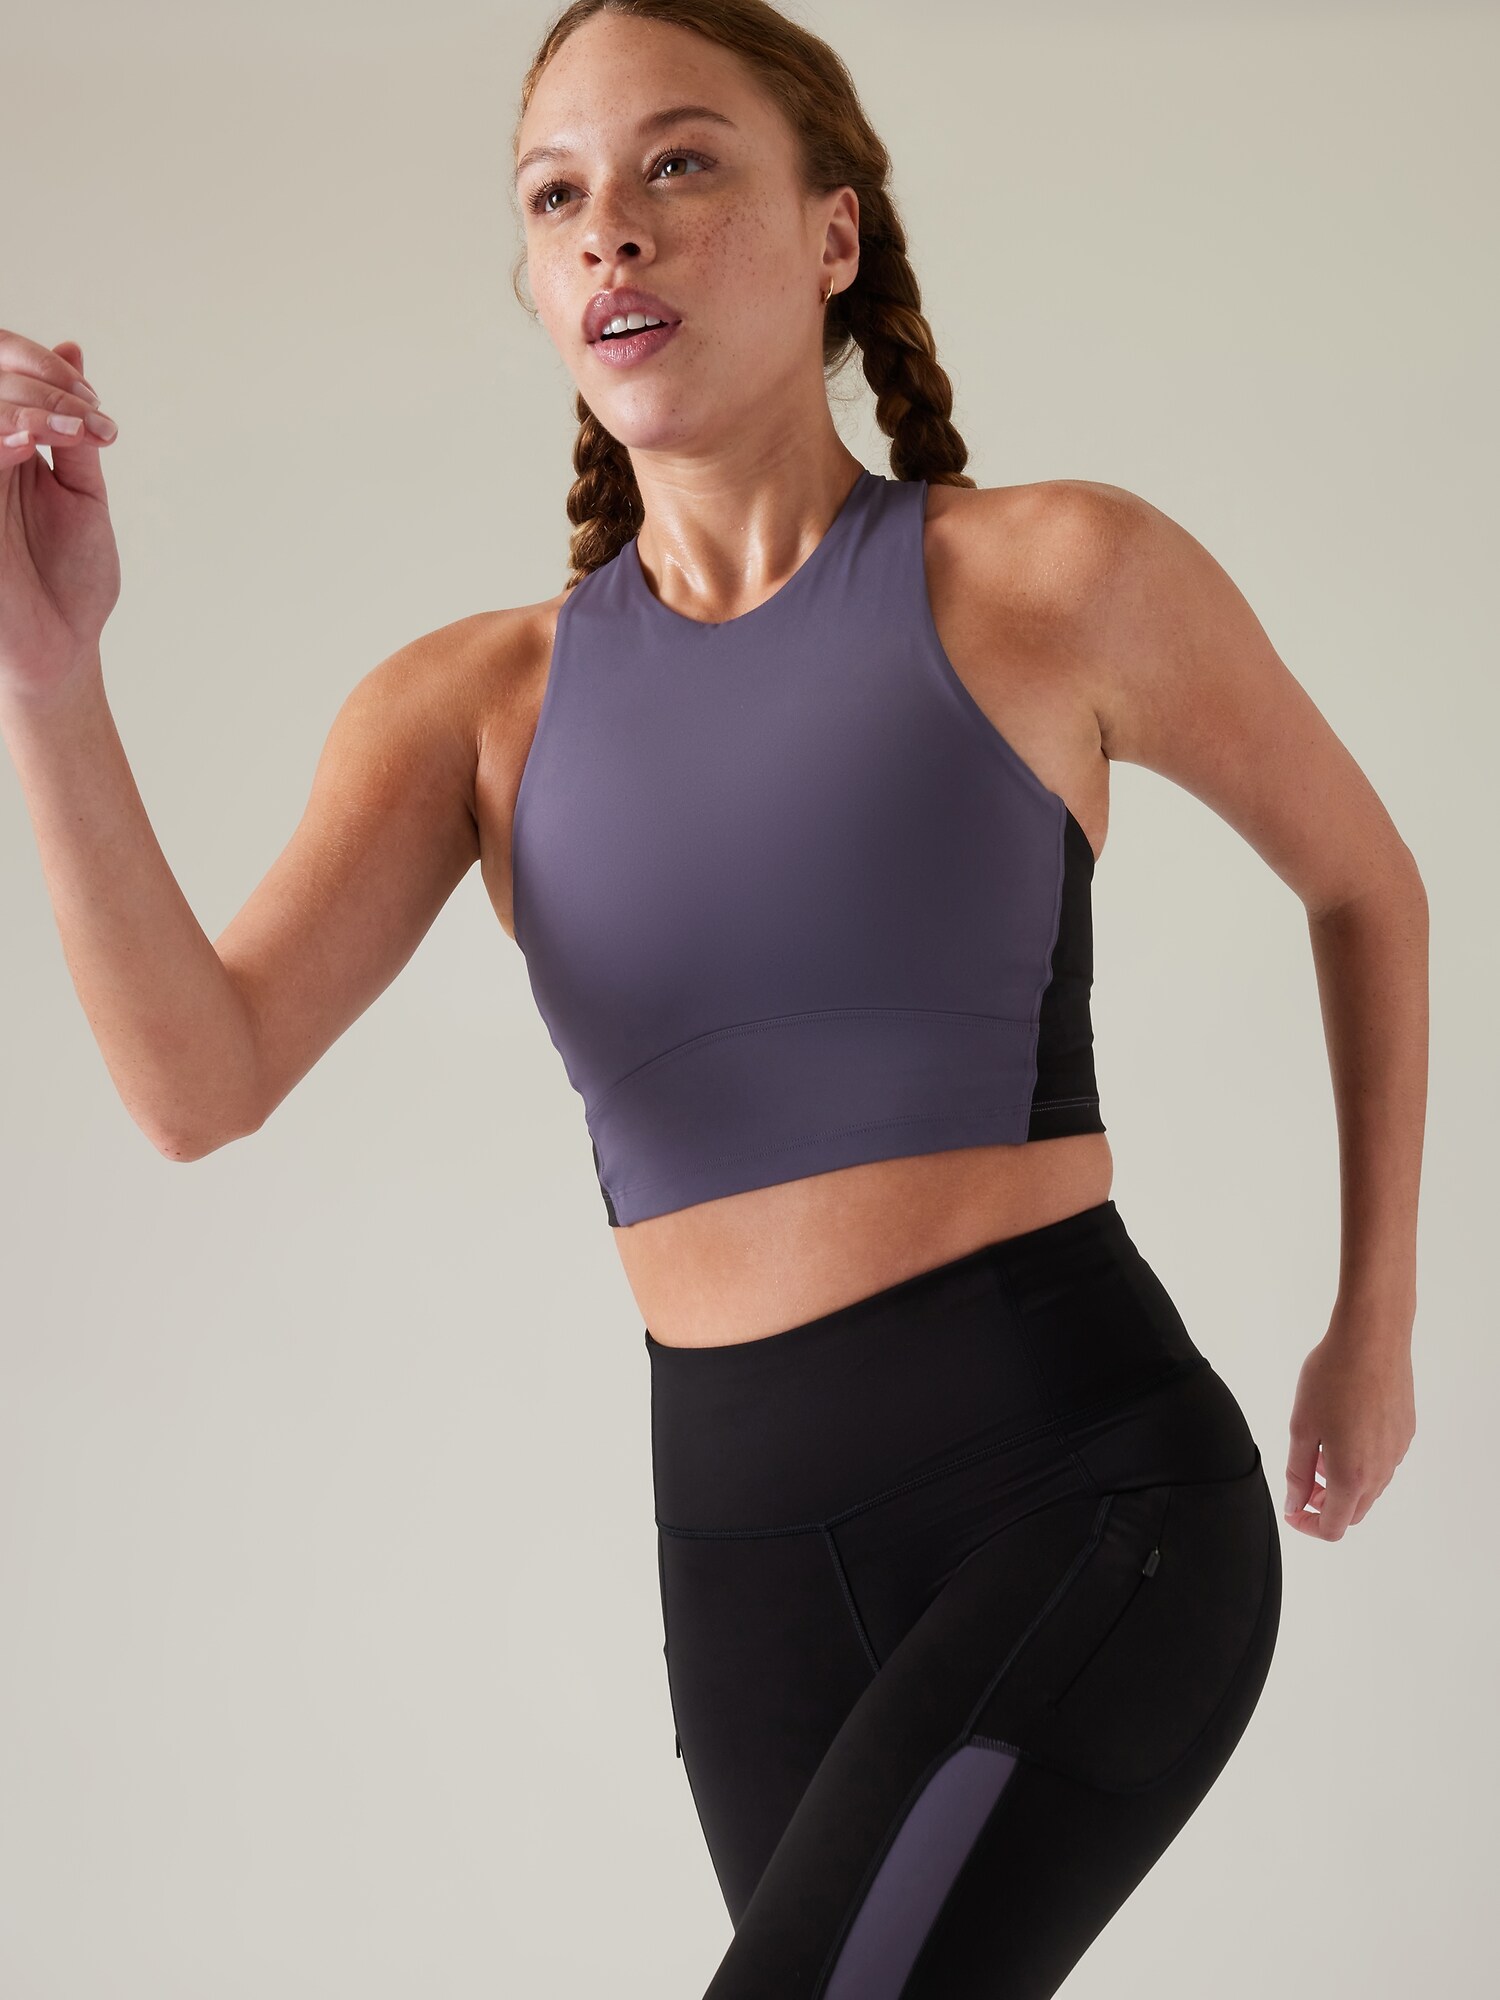 Centop Sports Bra for Women Padded Medium Support Yoga Bra